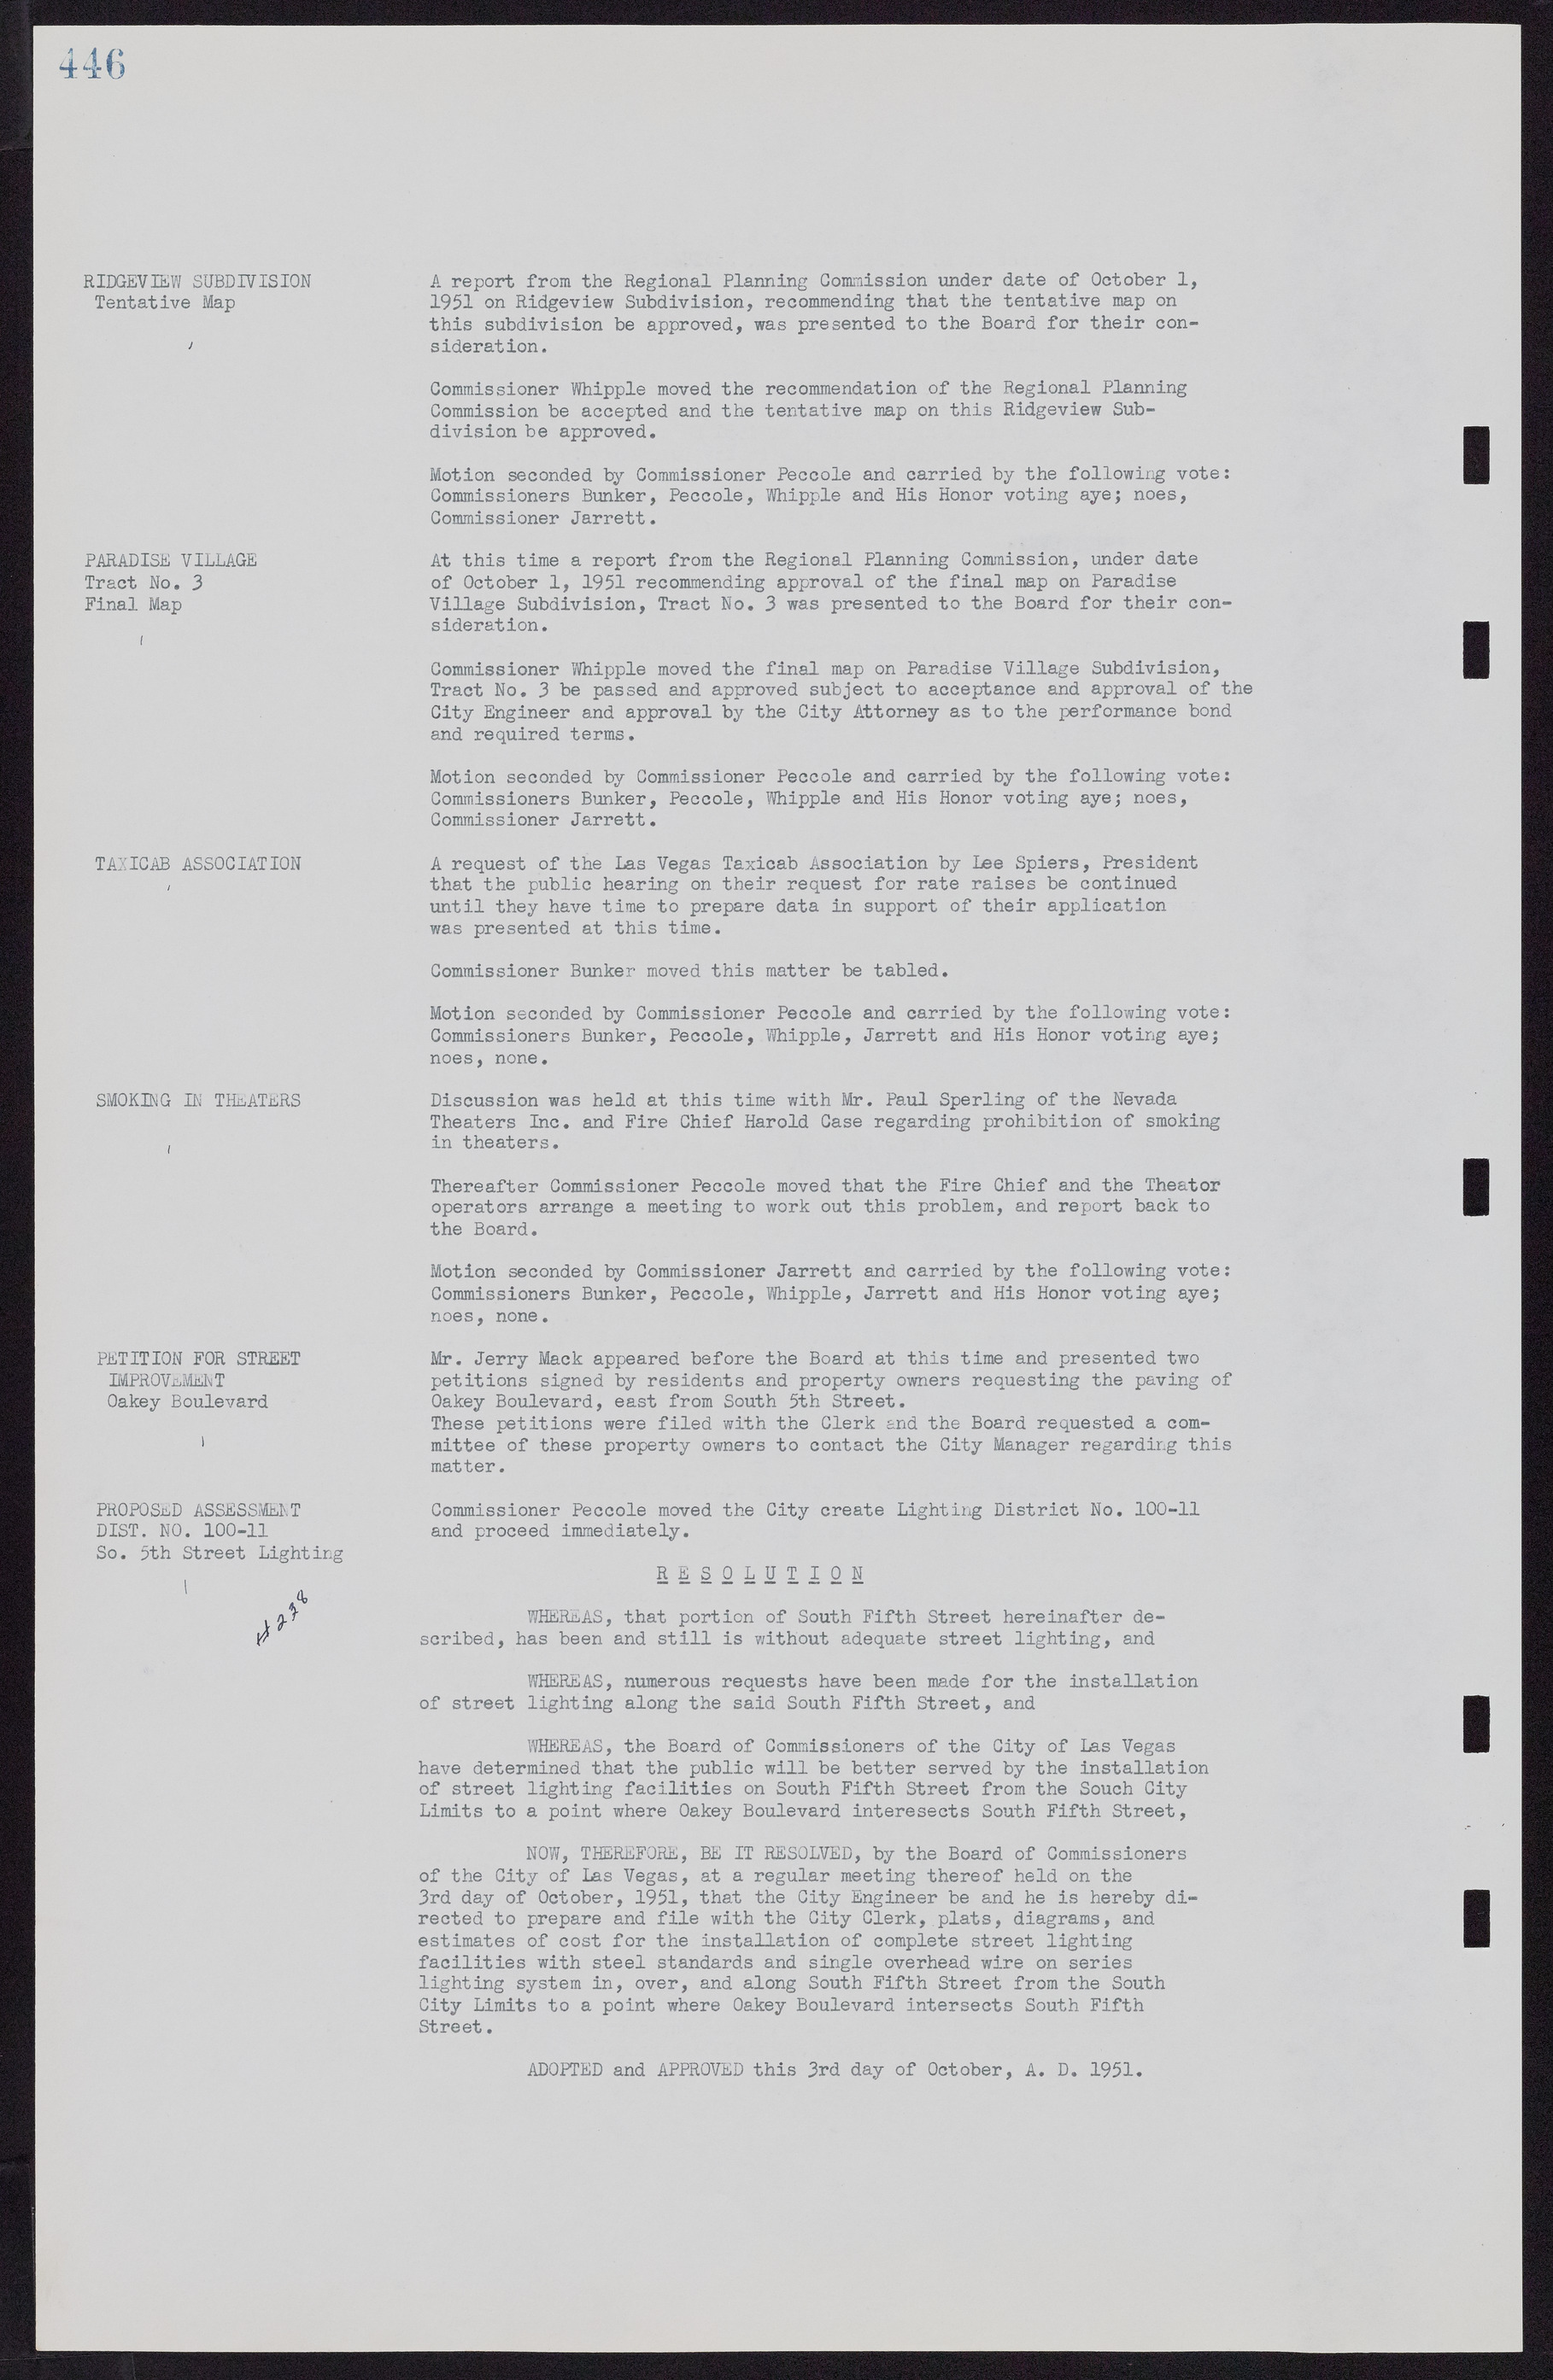 Las Vegas City Commission Minutes, November 7, 1949 to May 21, 1952, lvc000007-462